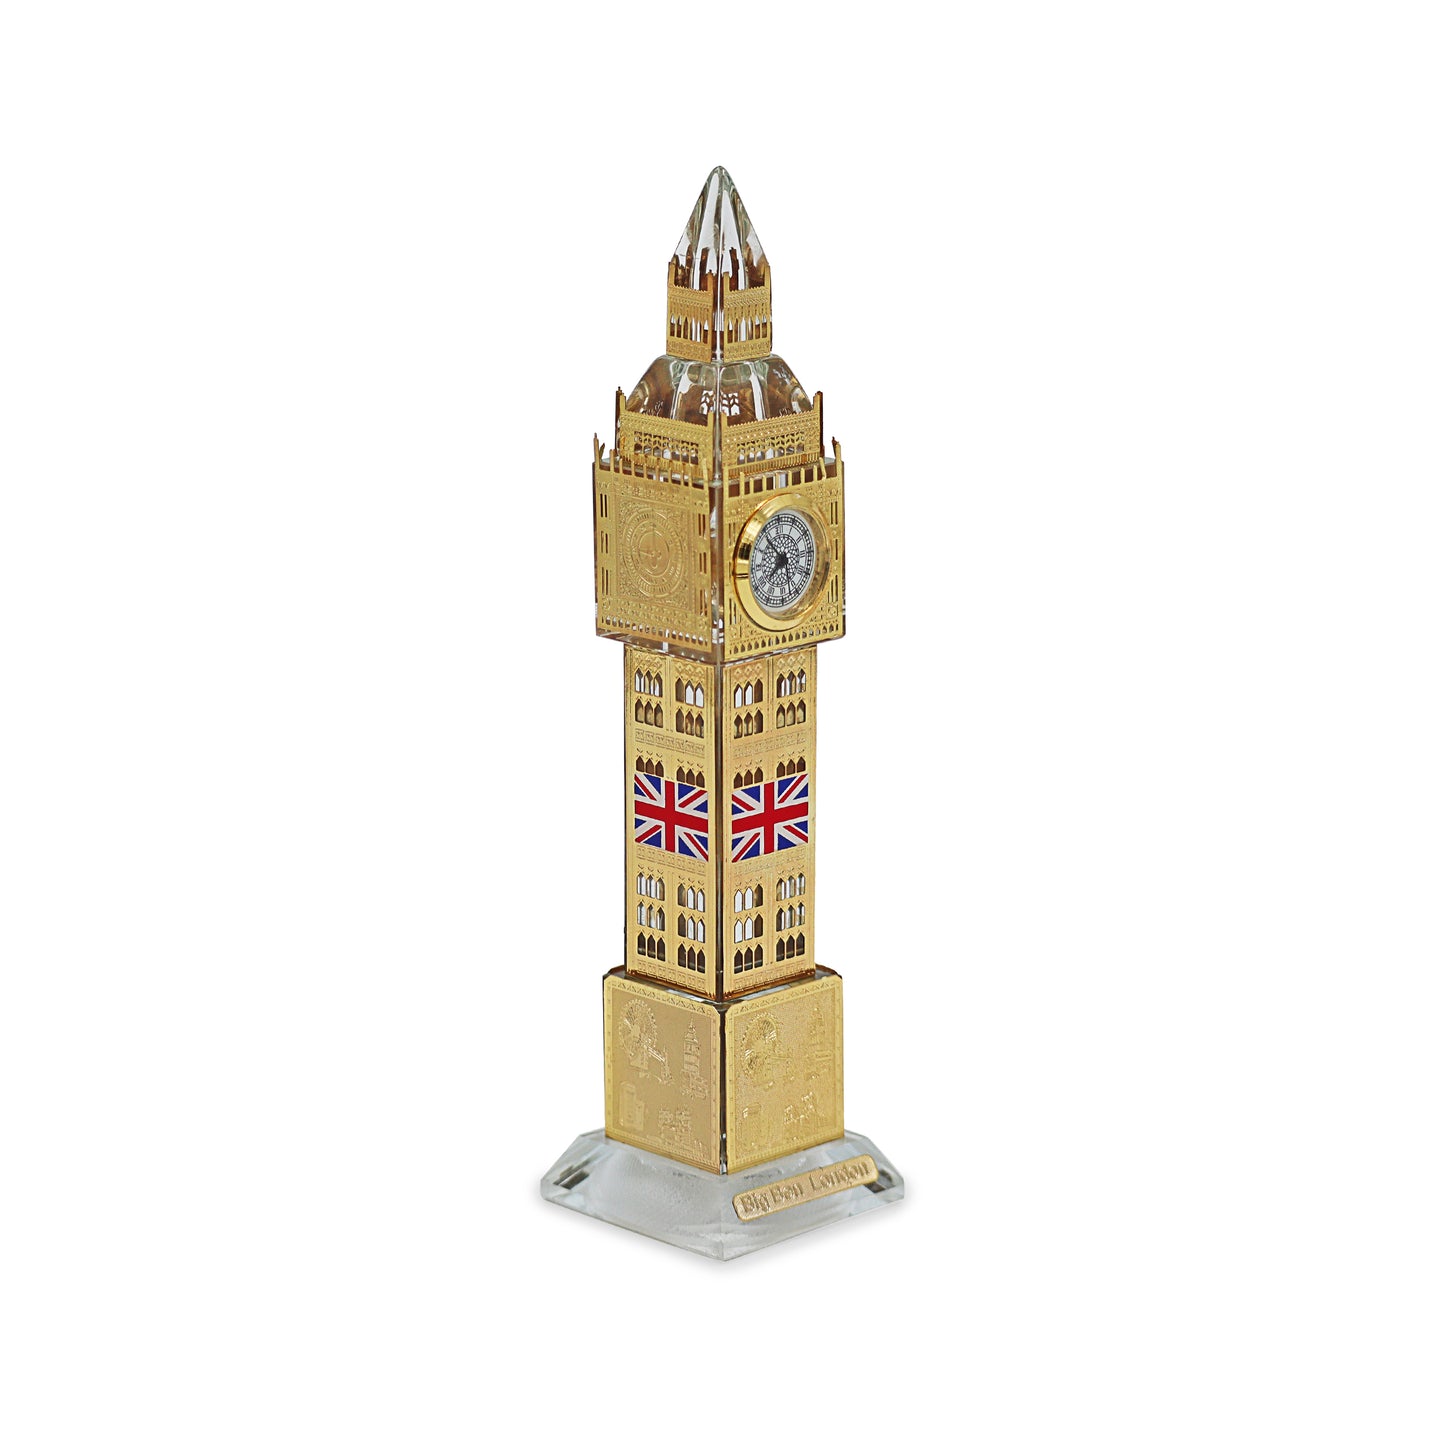 London Souvenir Crystal Glass Big Ben Model With LED Lights